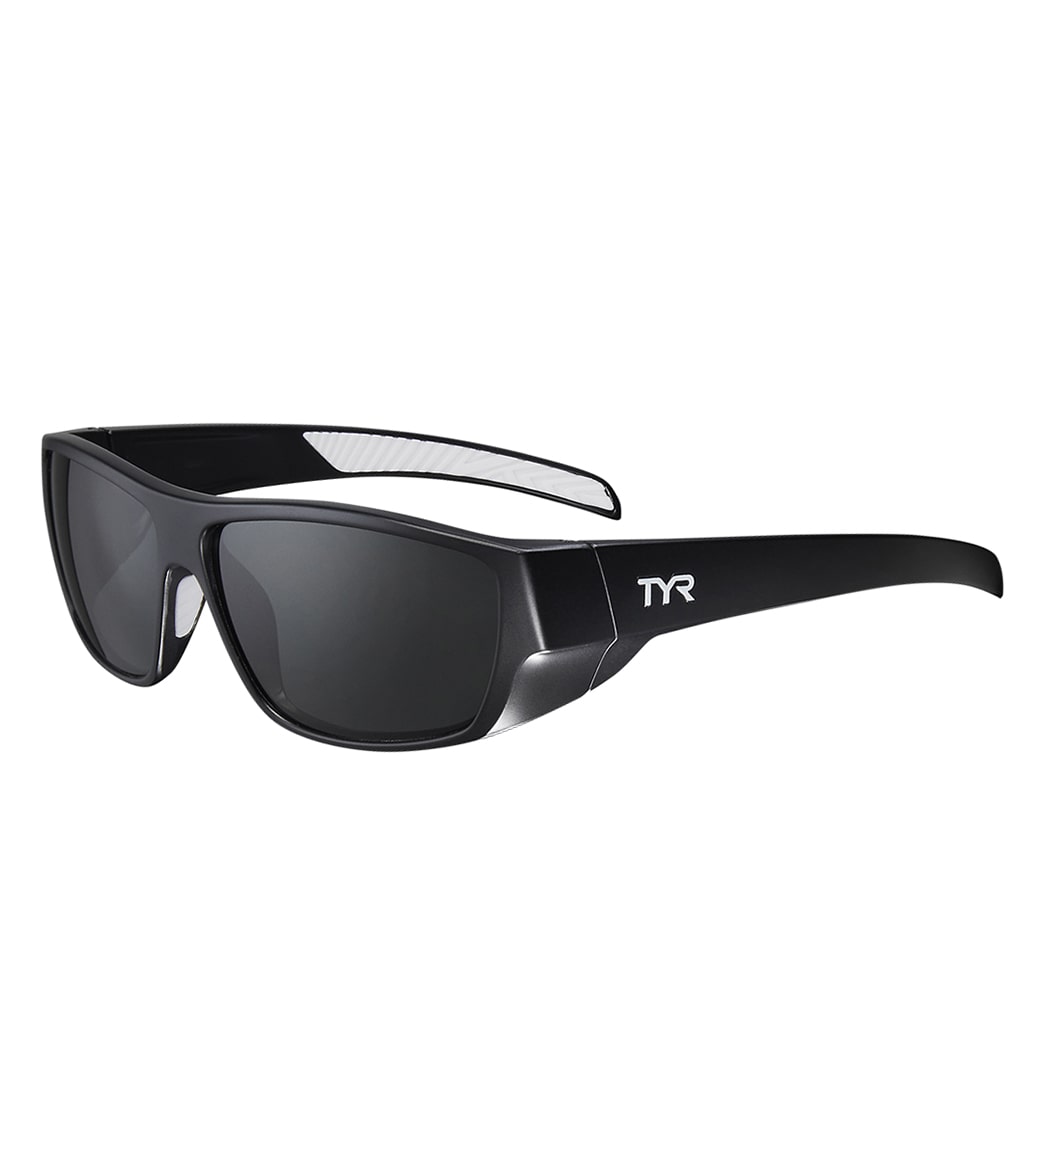 TYR Men's Knox Wrap Sunglasses - Smoke/Black One Size - Swimoutlet.com